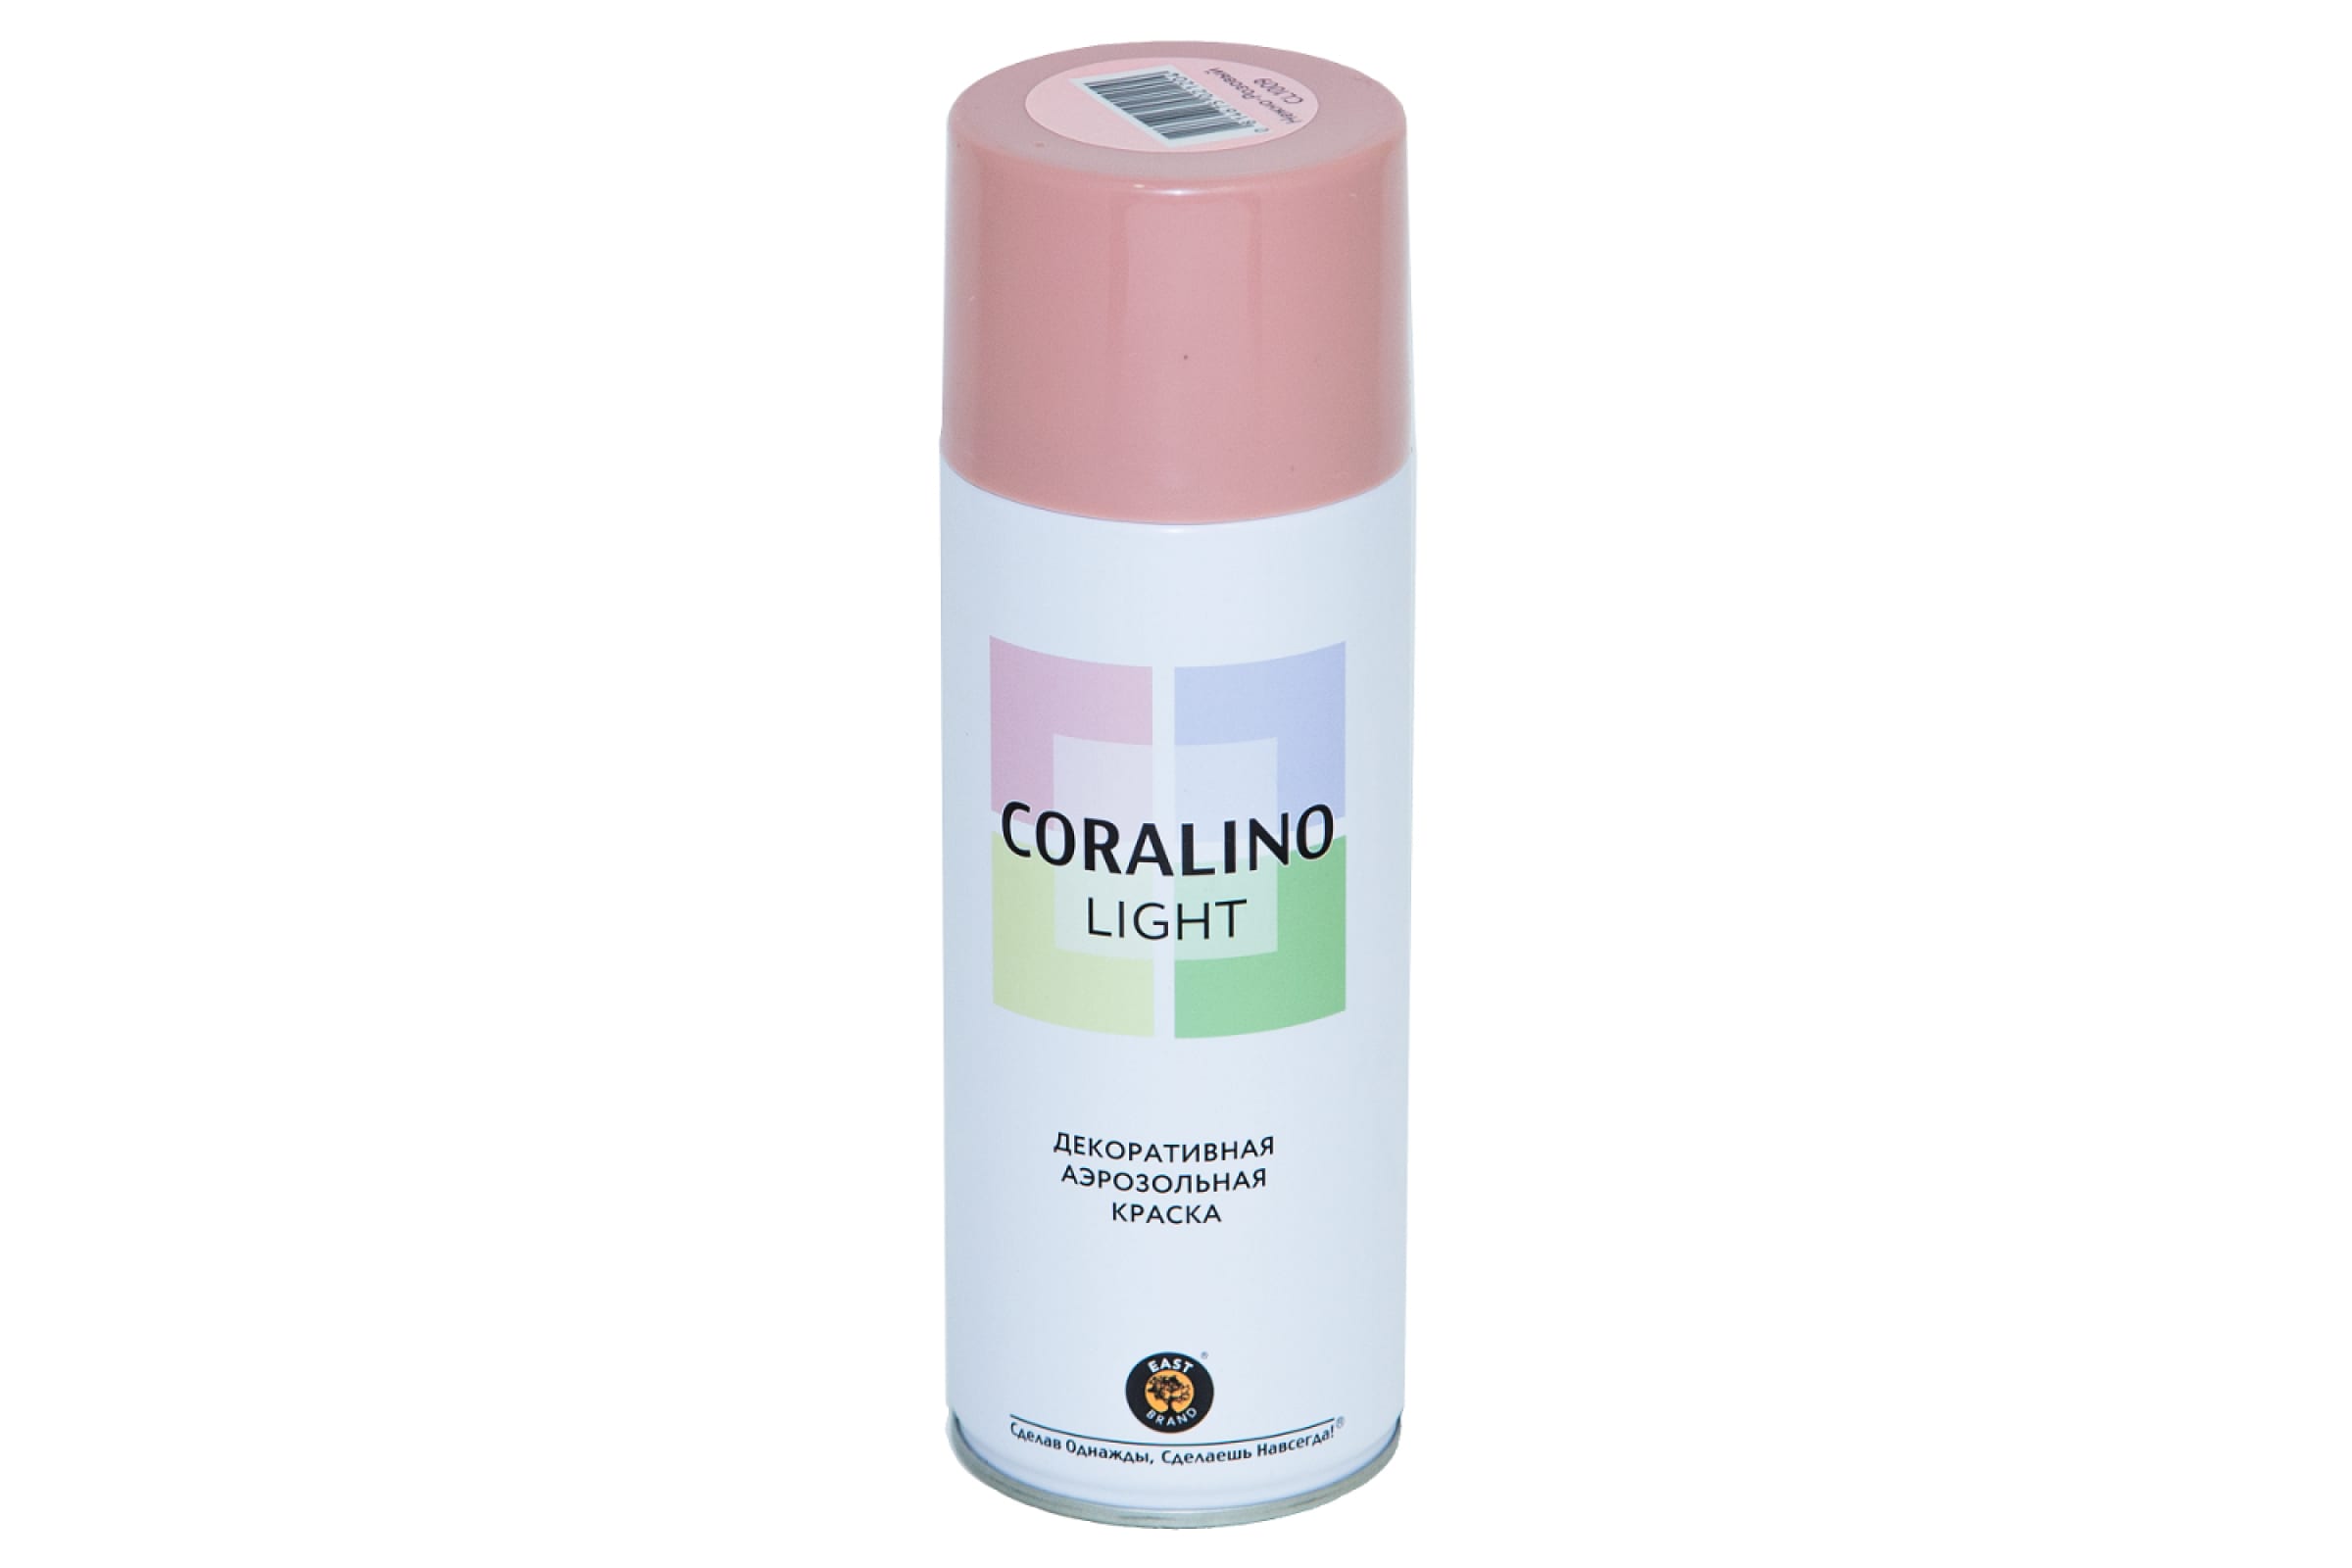 CORALINO LIGHT Краска аэроз. декоративная , Нежно розовый CL1009 комплект потолка 1 35x0 9 м цвет нежно розовый